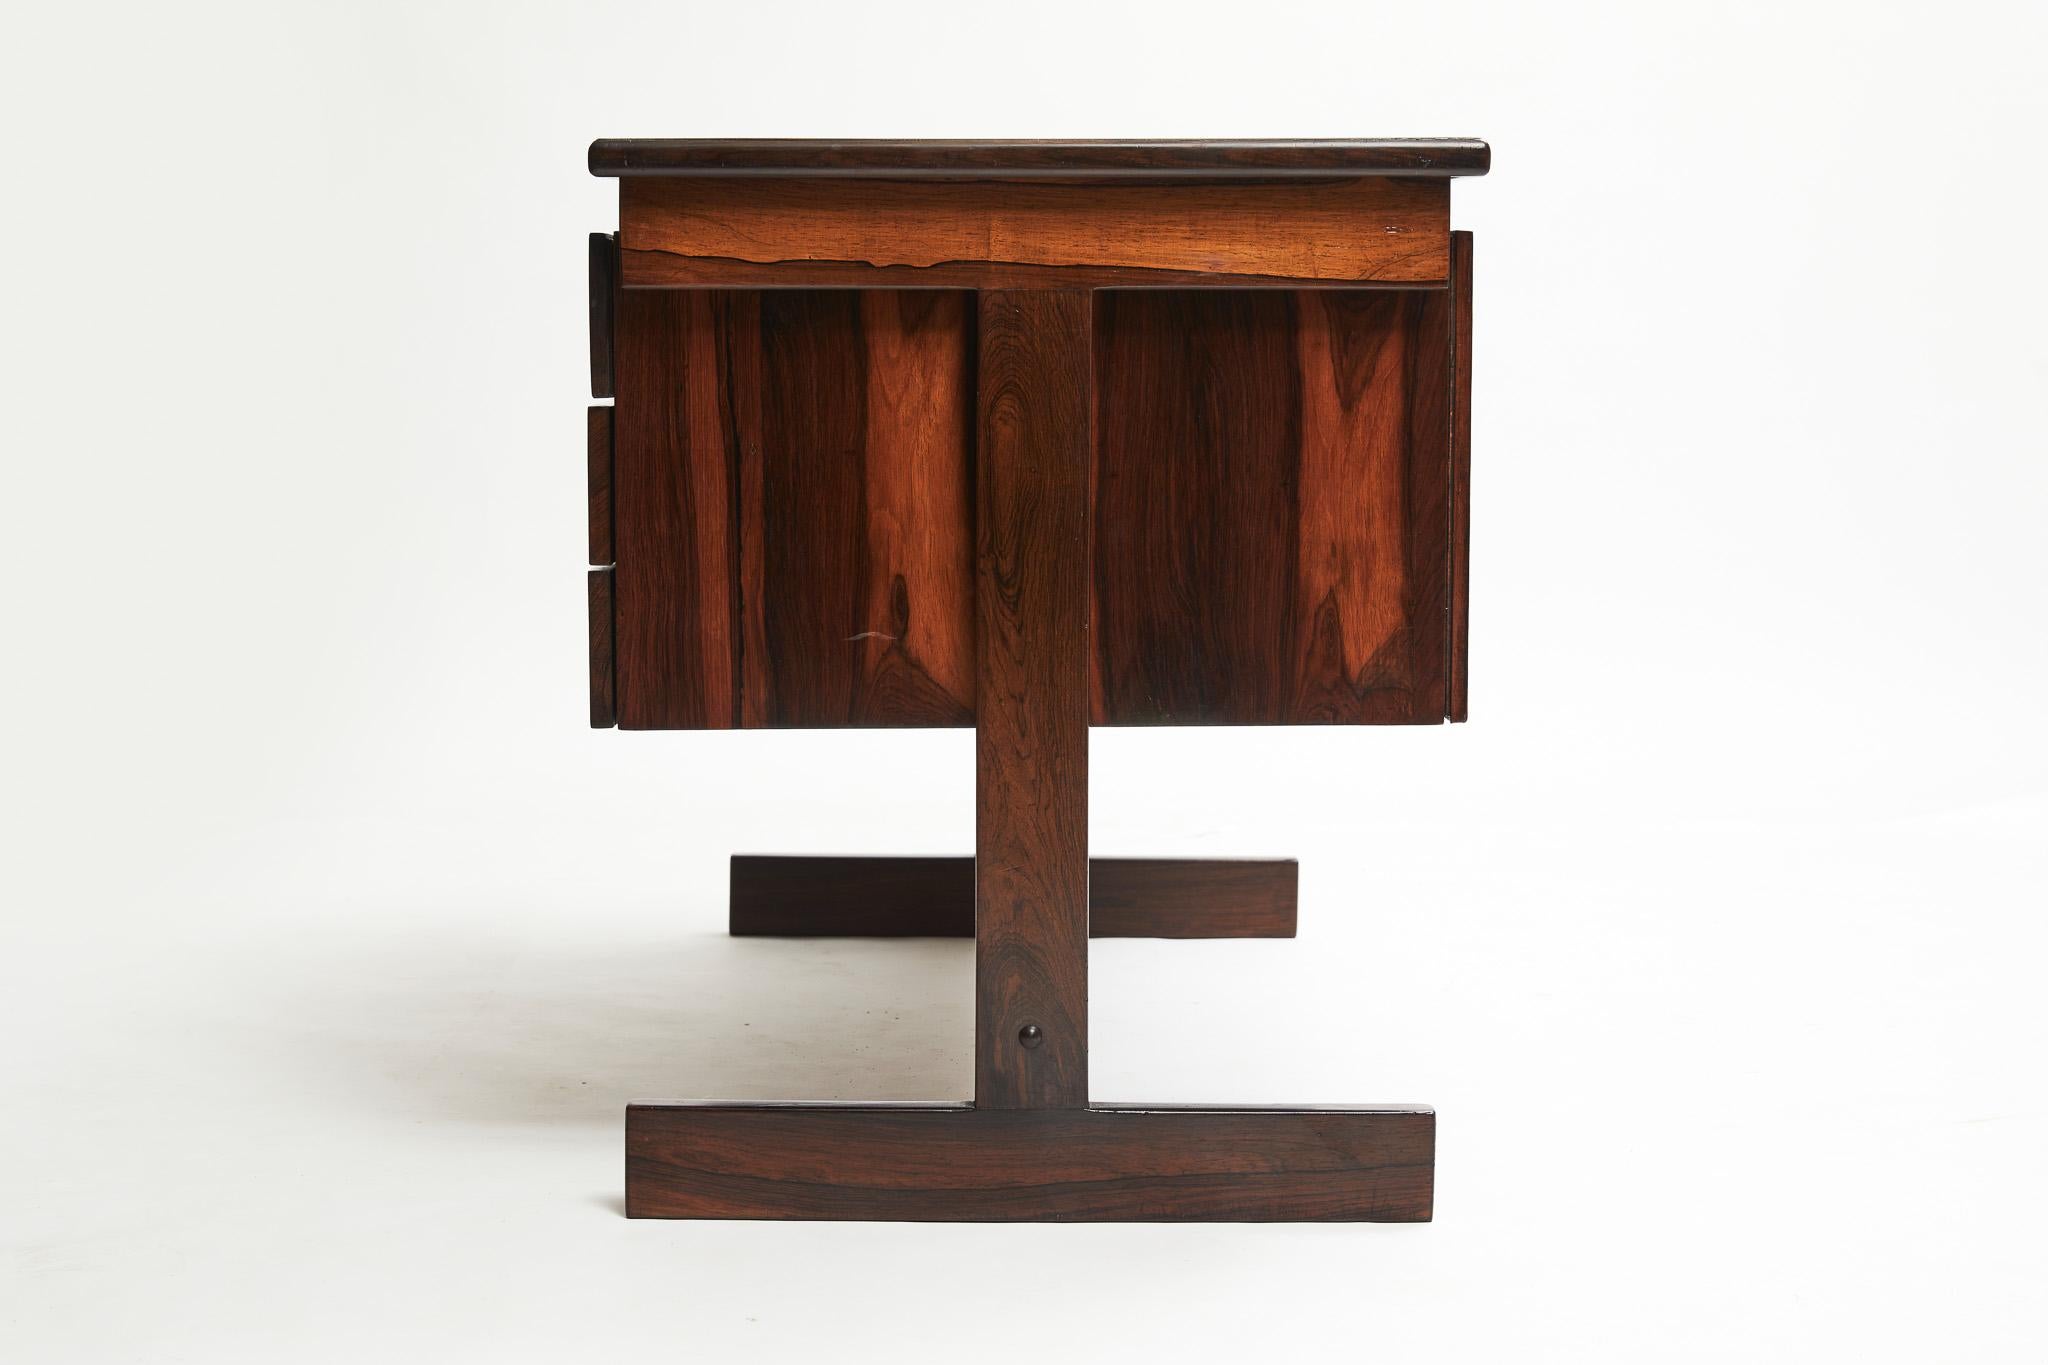 Brazilian Midcentury Modern Desk in Hardwood & Floating Drawers by Sergio Rodrigues Brazil